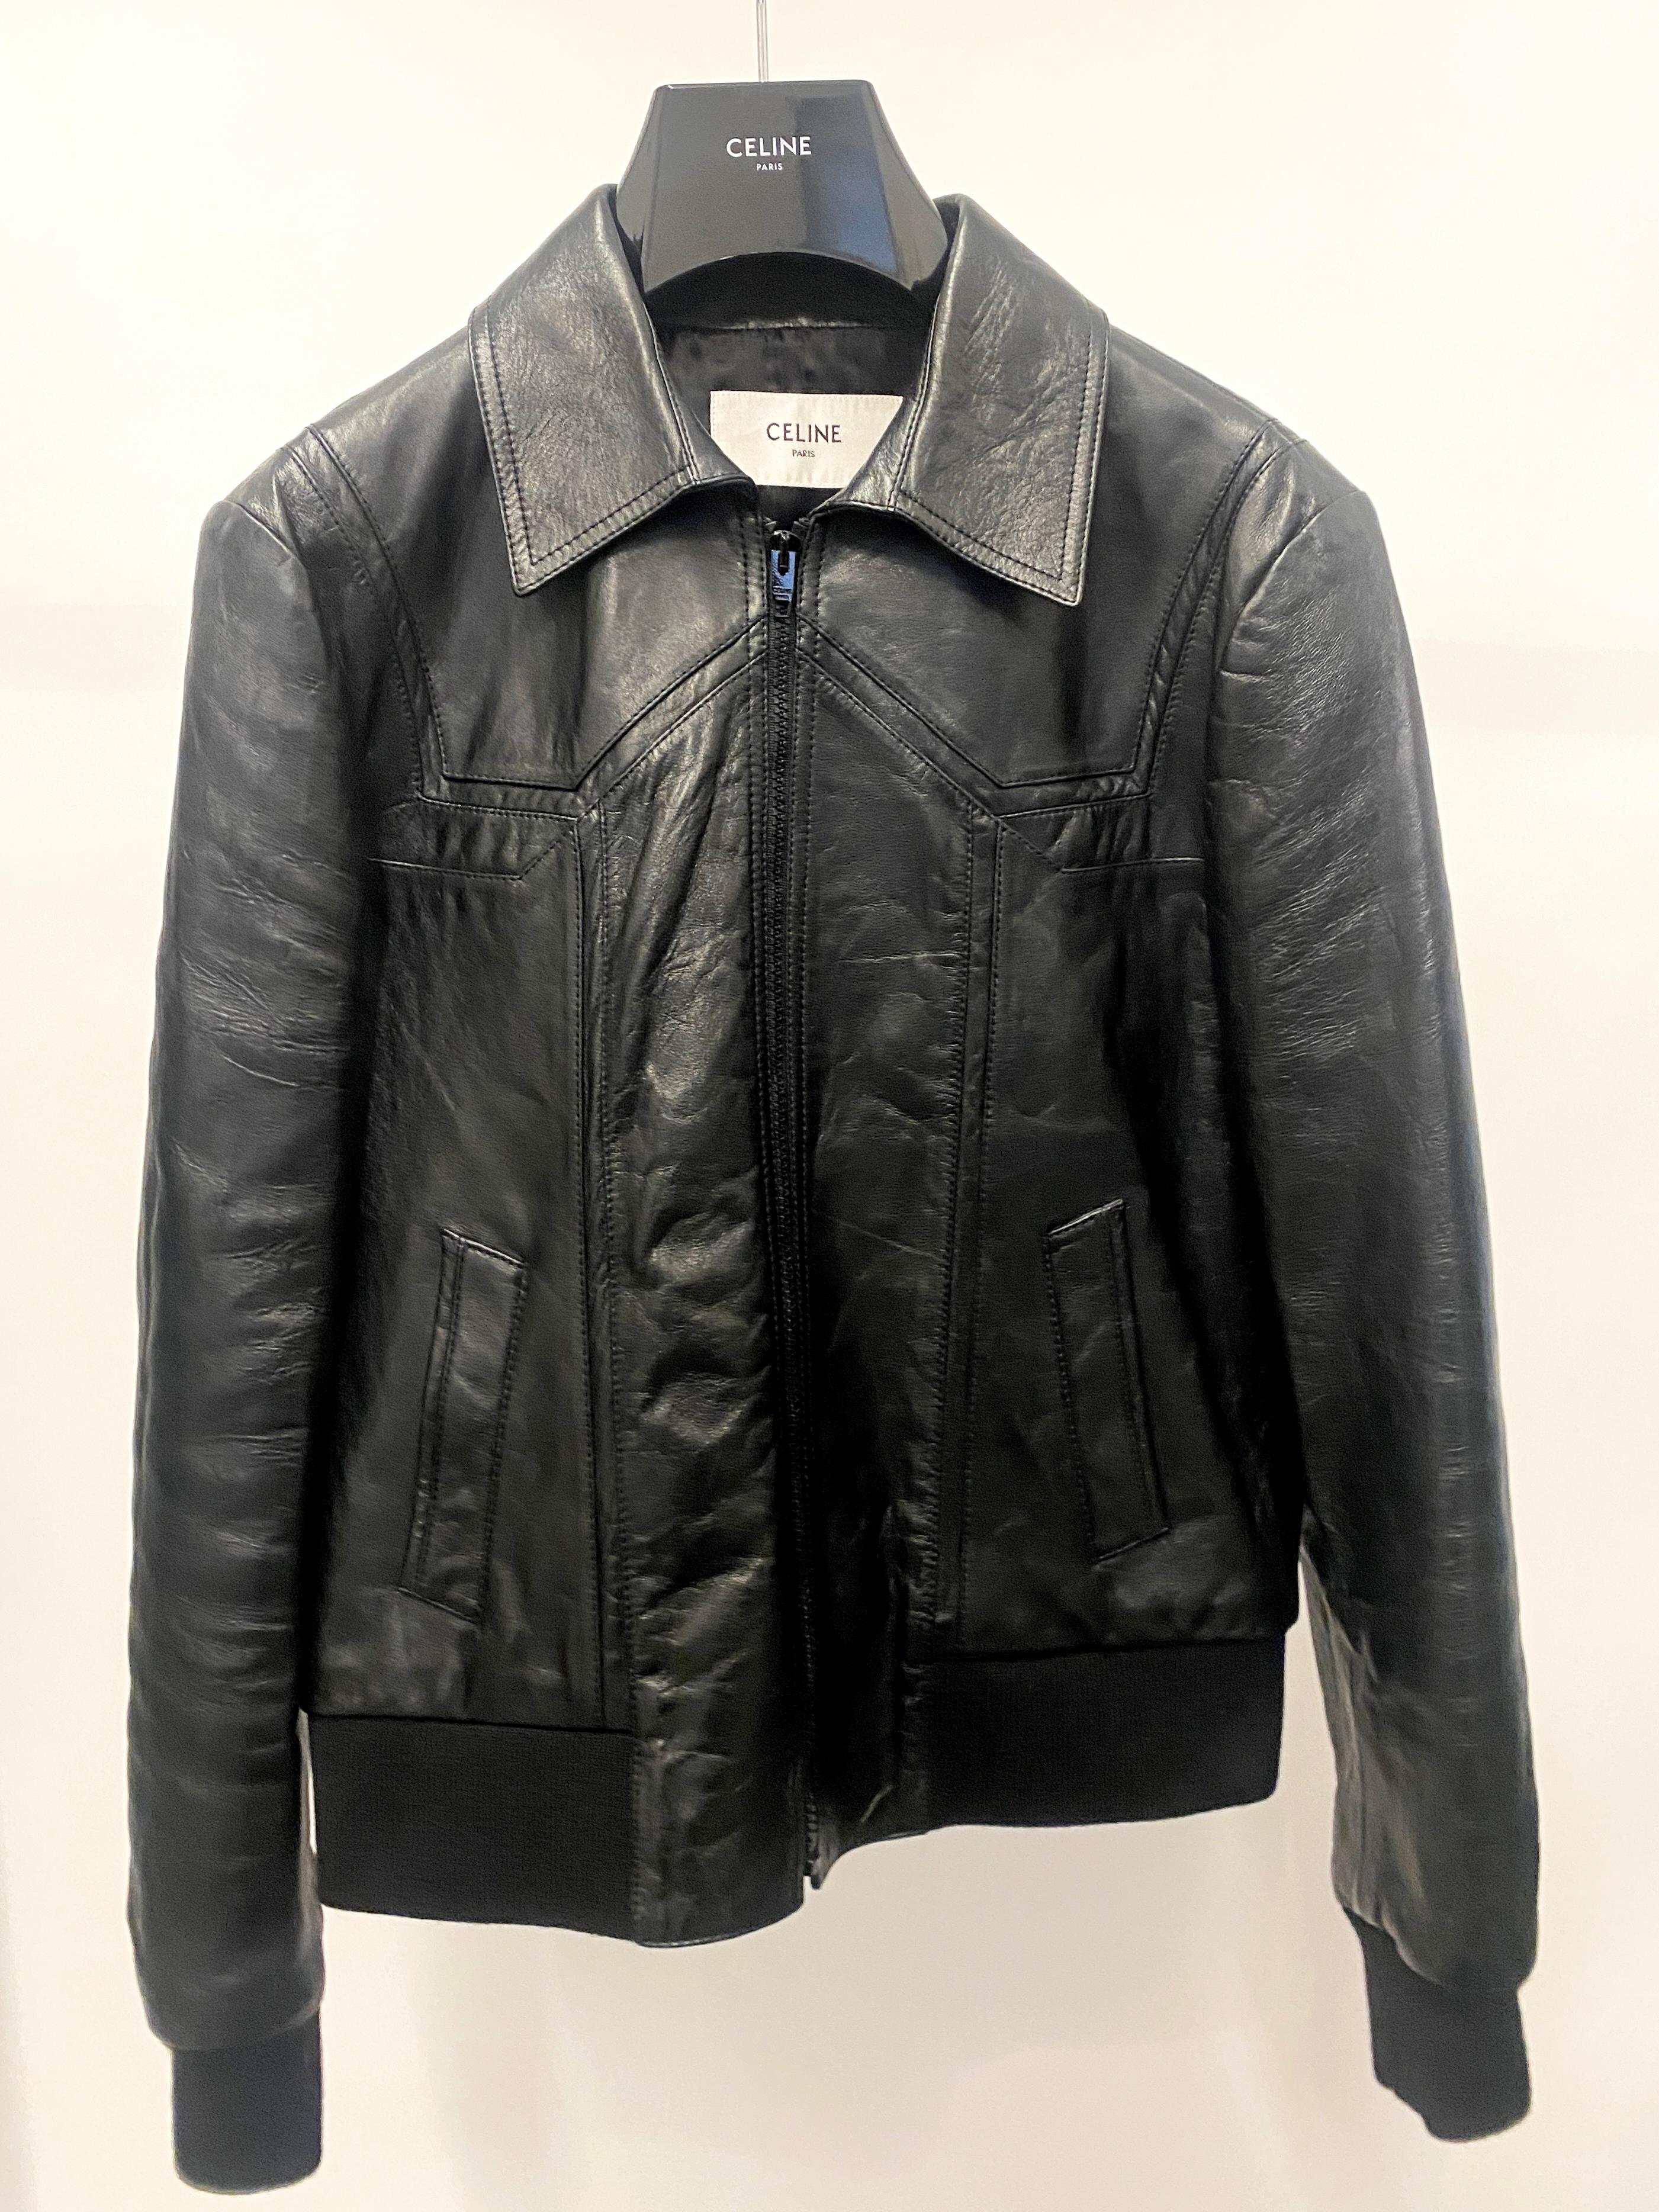 Men's CELINE BY HEDI SLIMANE S/S 2020 Runway Leather Jacket